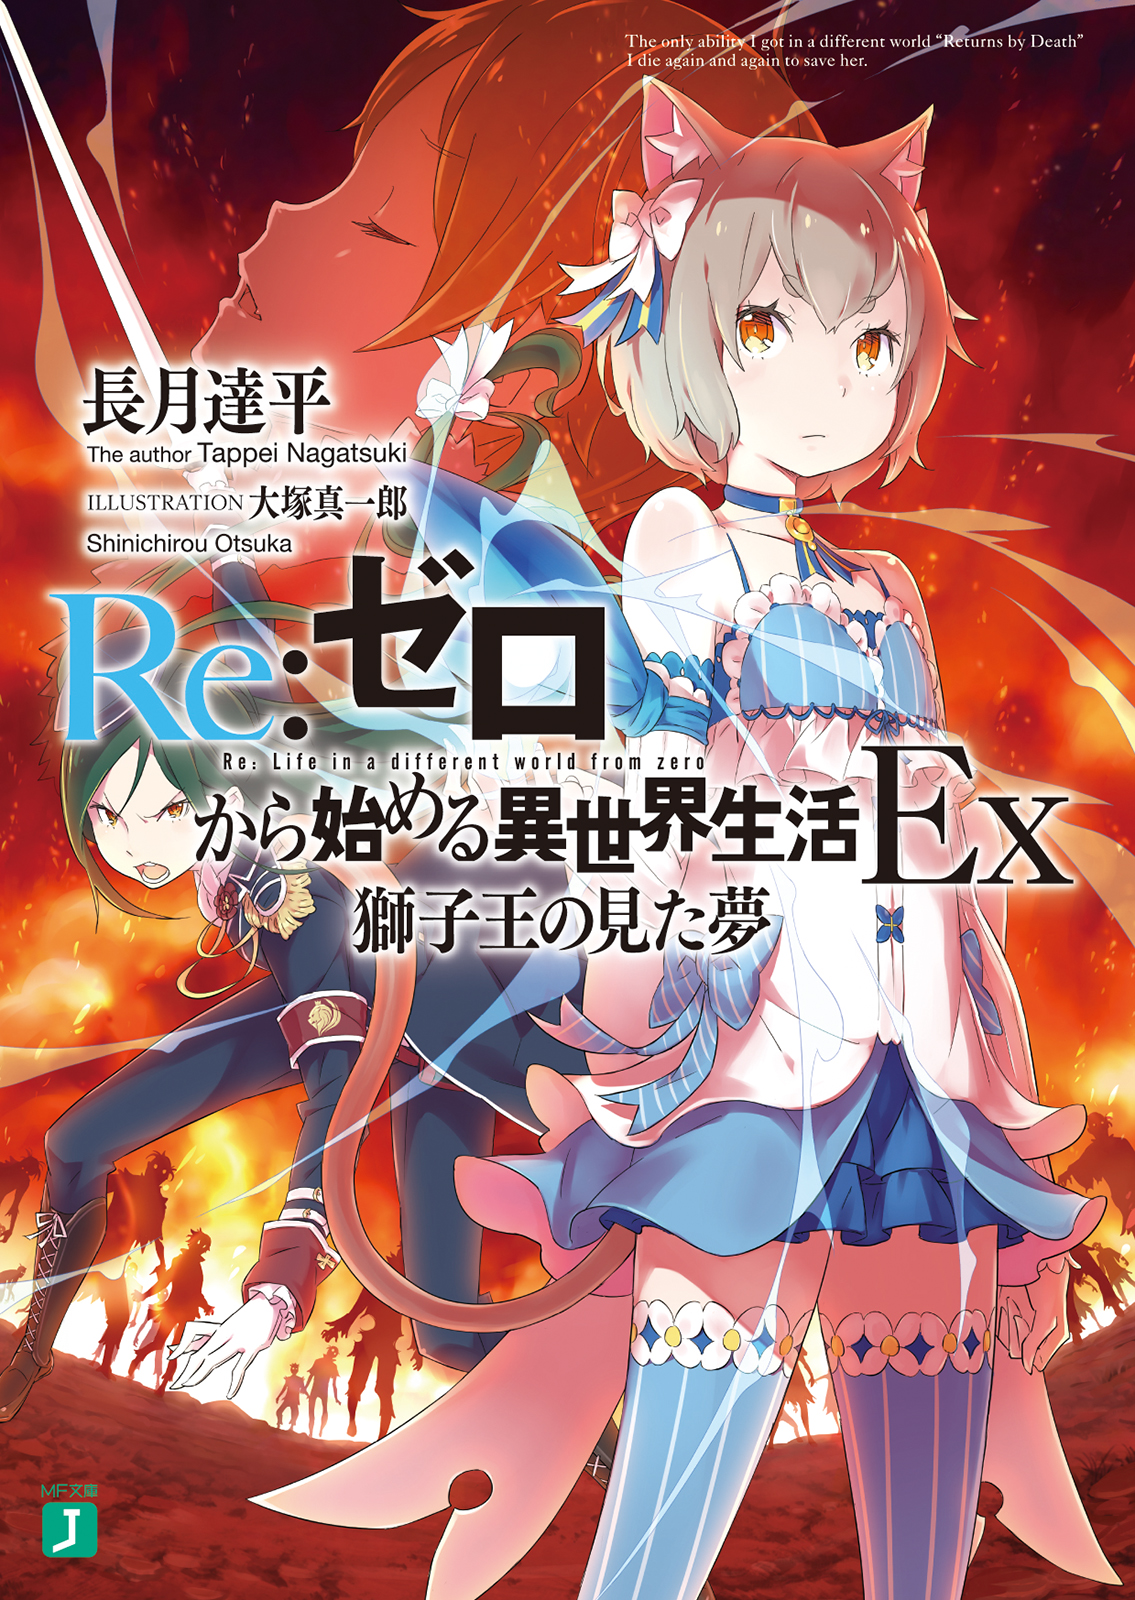 Re:Zero Ex Light Novel Volume 1 | Re:Zero Wiki | Fandom